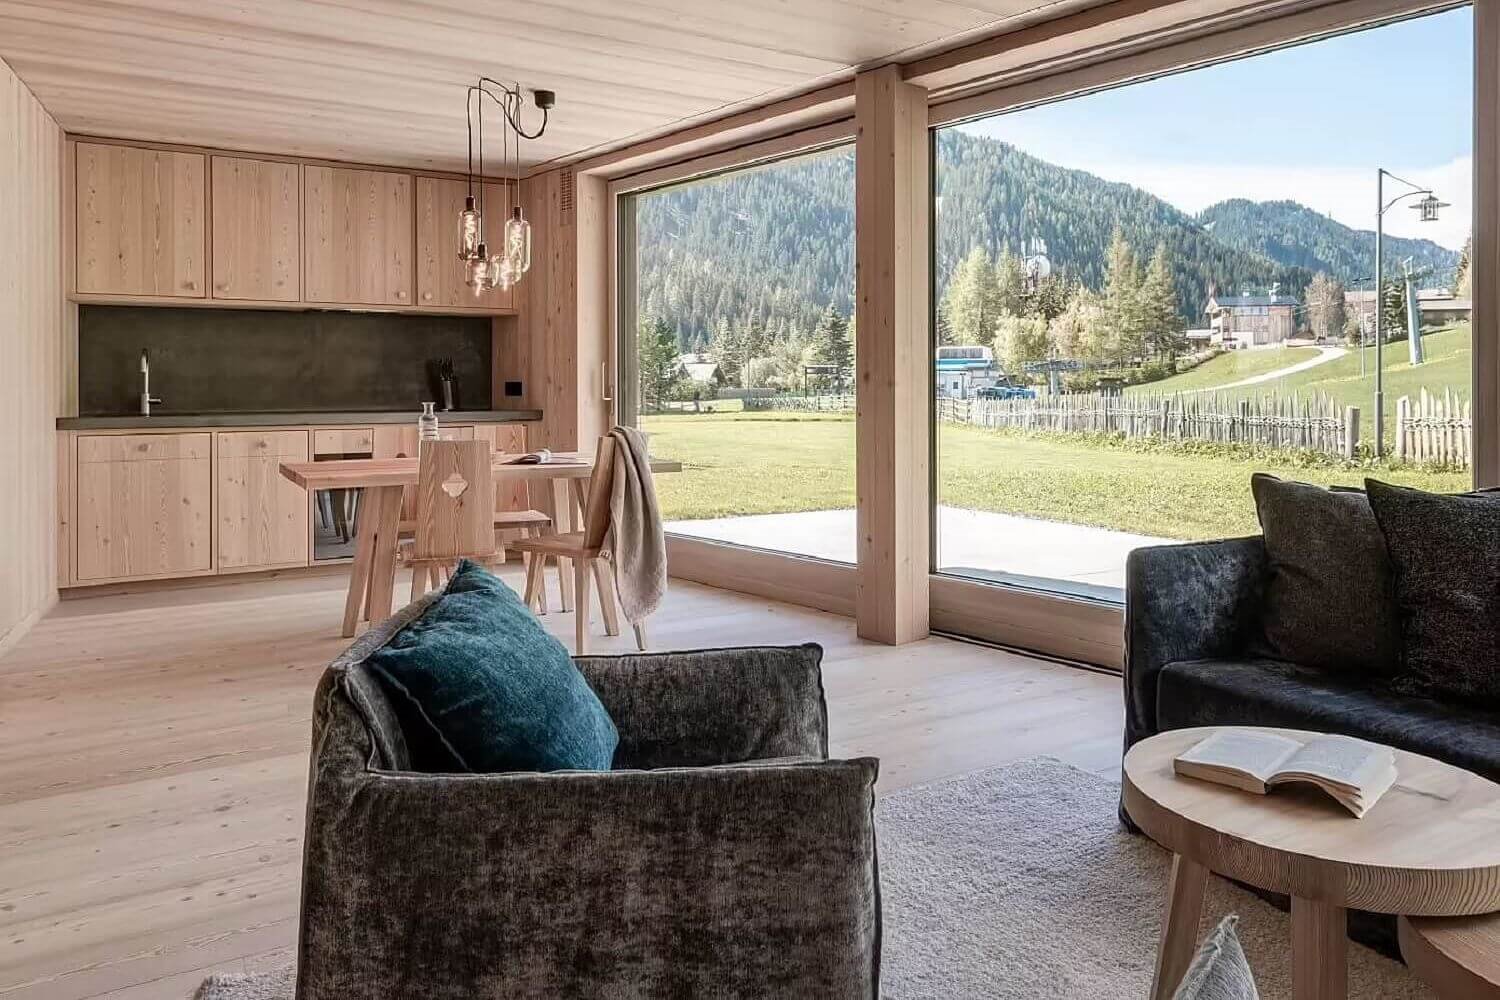 Moderno refugio de madera cocina